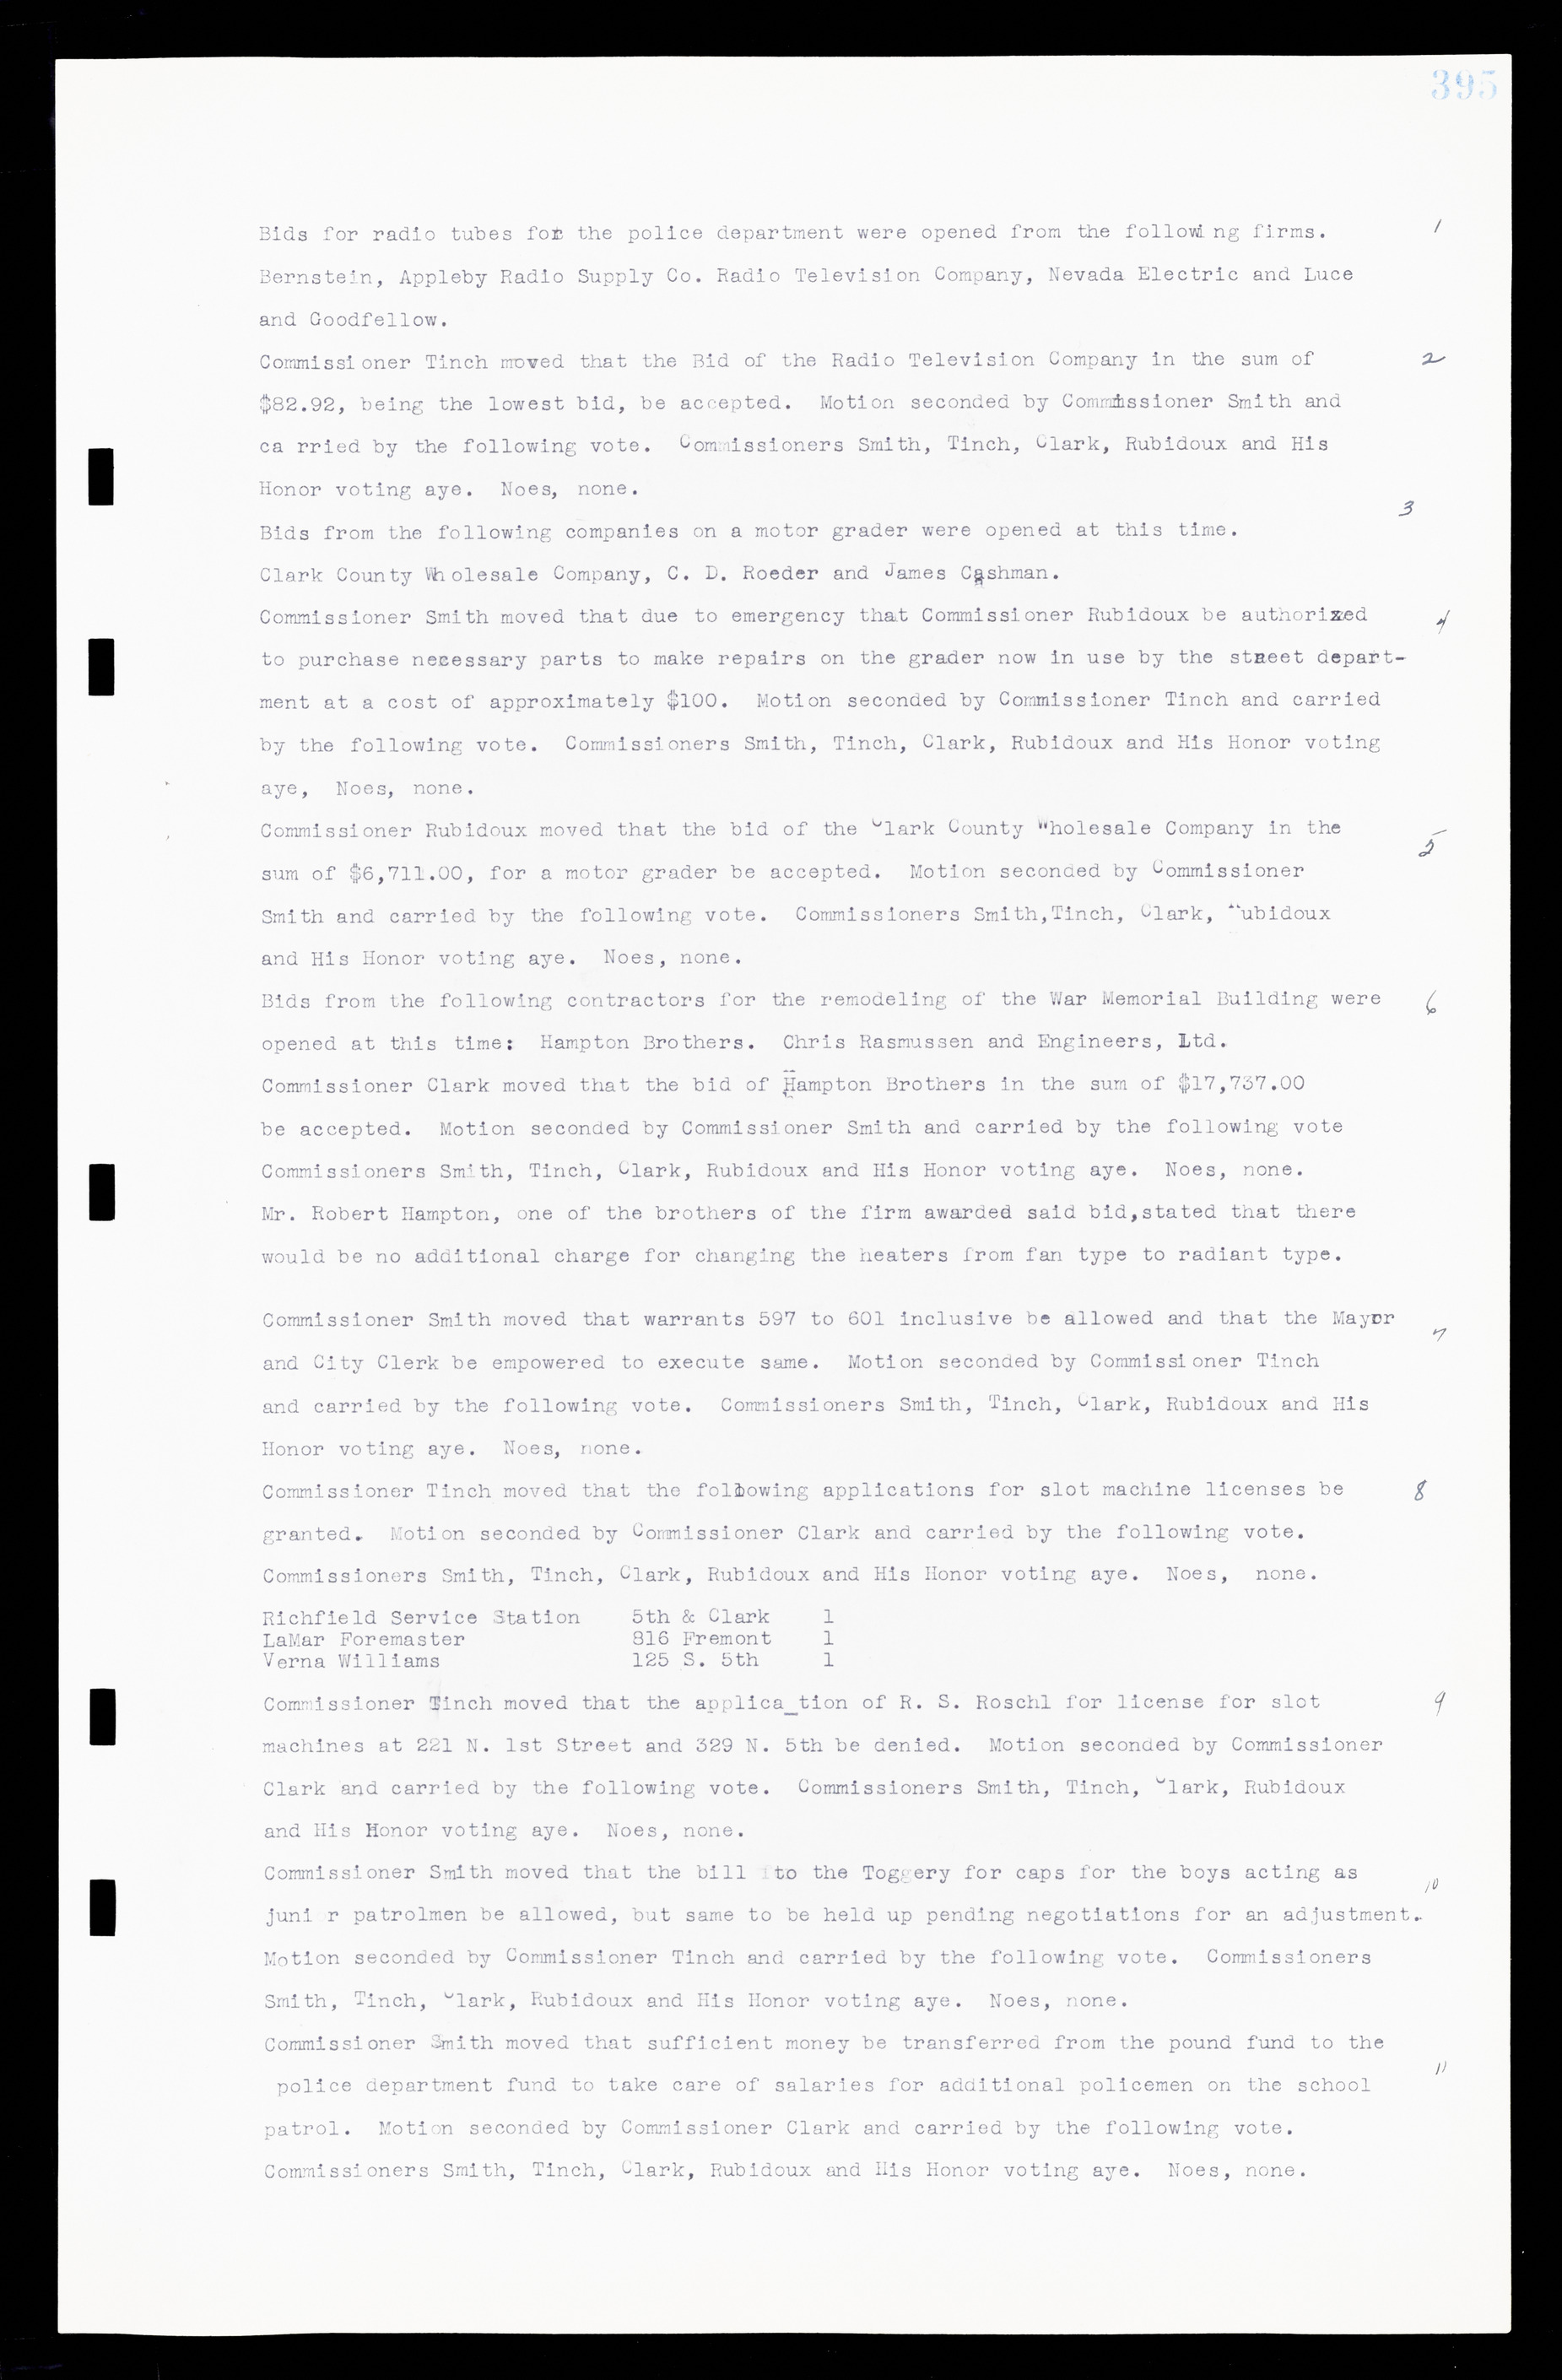 Las Vegas City Commission Minutes, February 17, 1937 to August 4, 1942, lvc000004-421